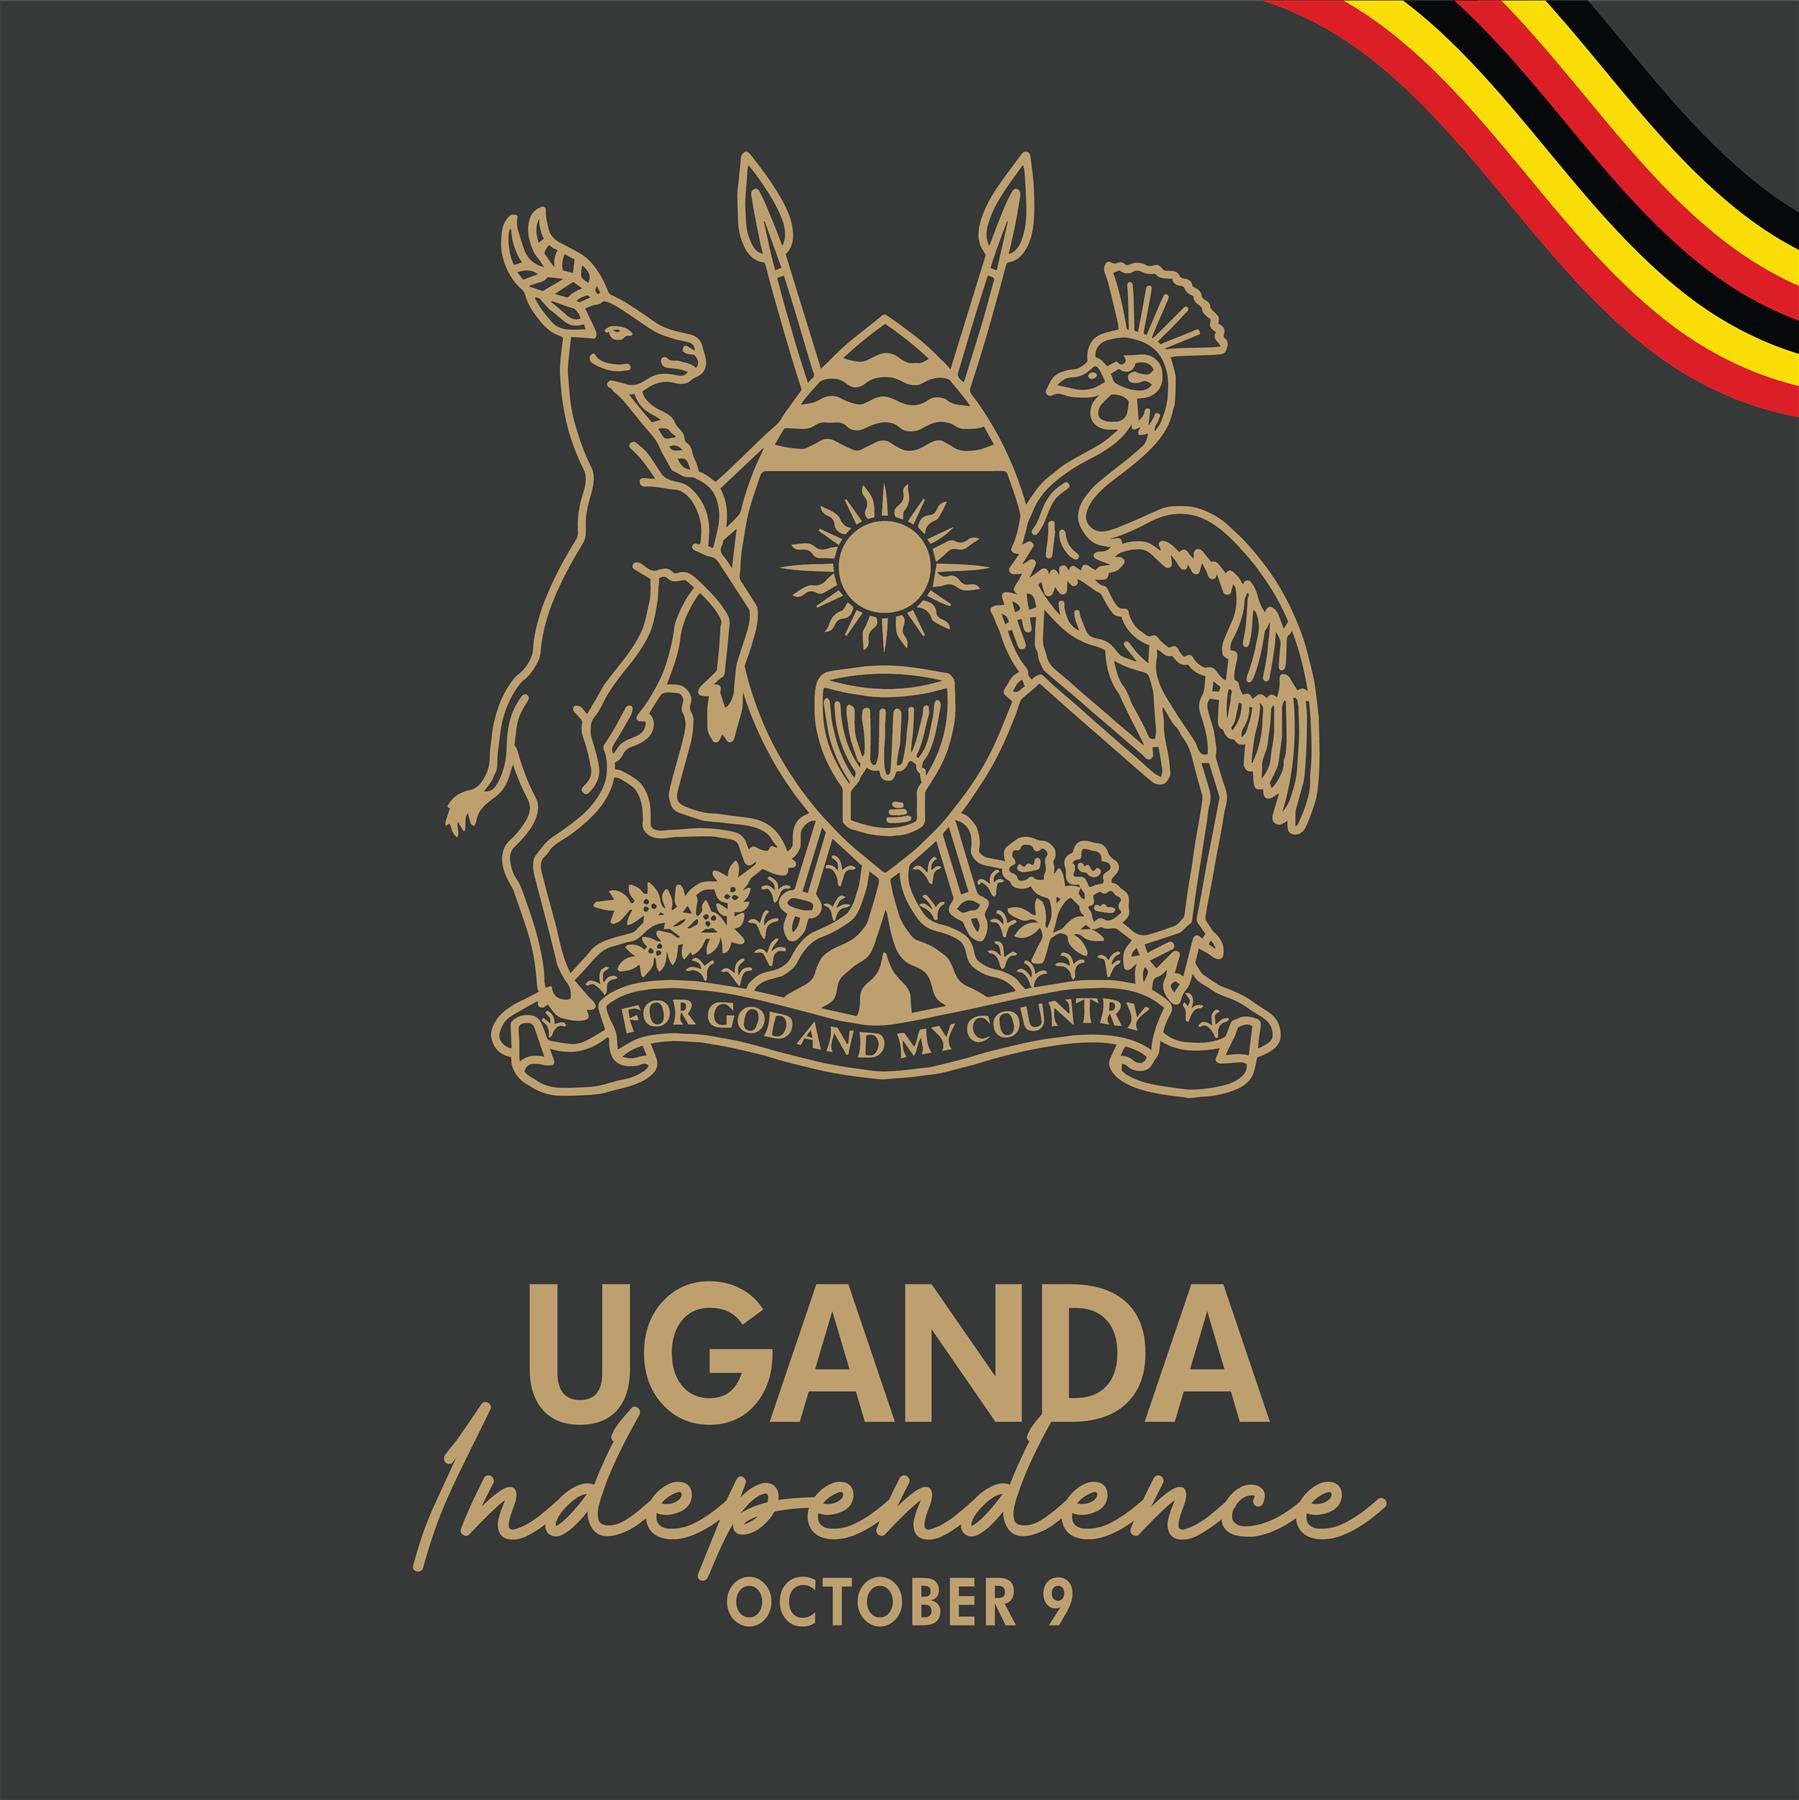 Uganda’s independence: What if?